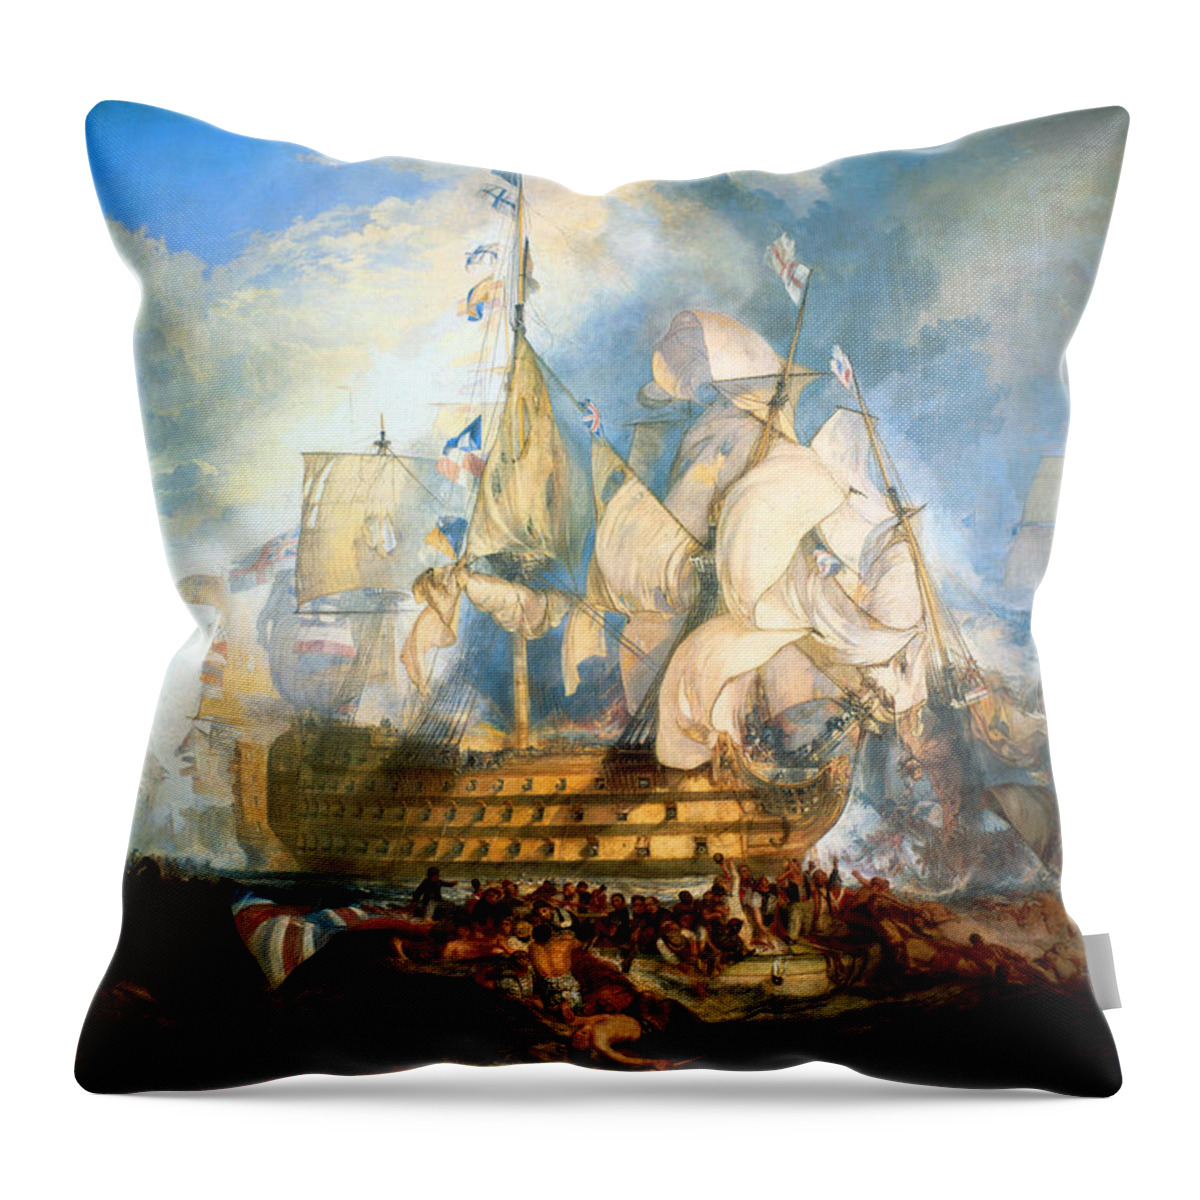 Trafalgar Throw Pillow featuring the painting The Battle of Trafalgar by Long Shot